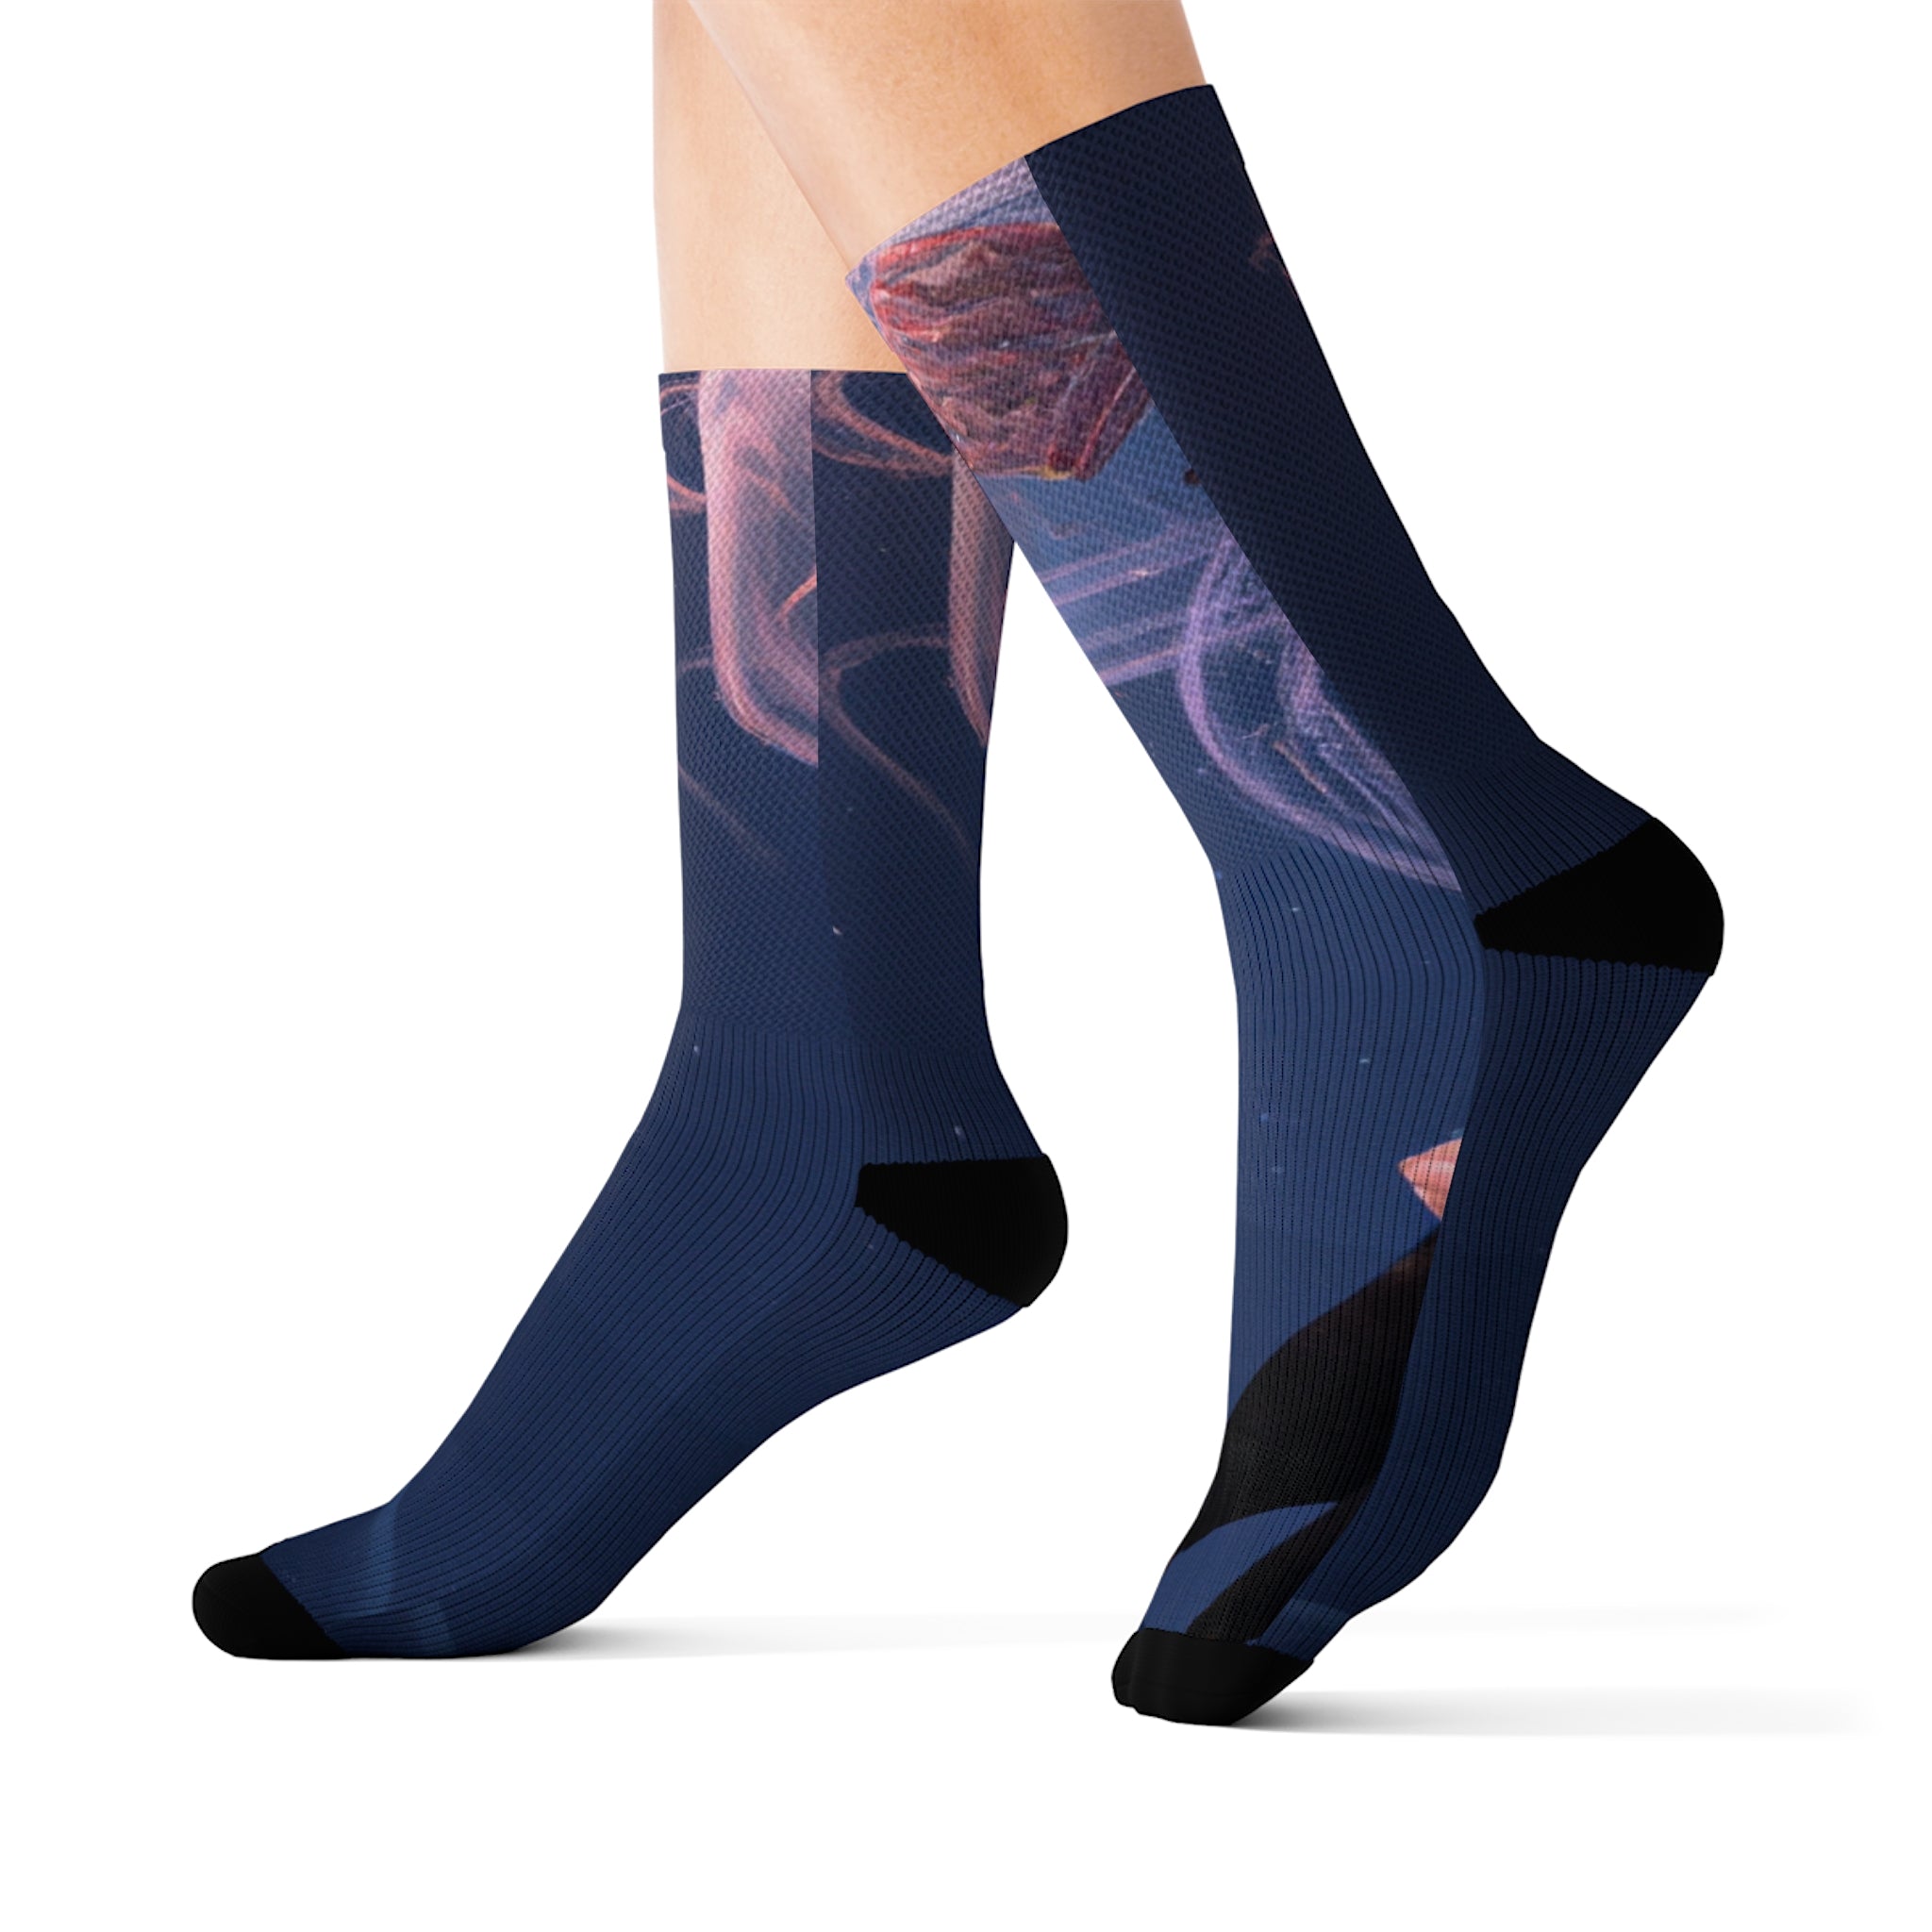 Special Designer Socks